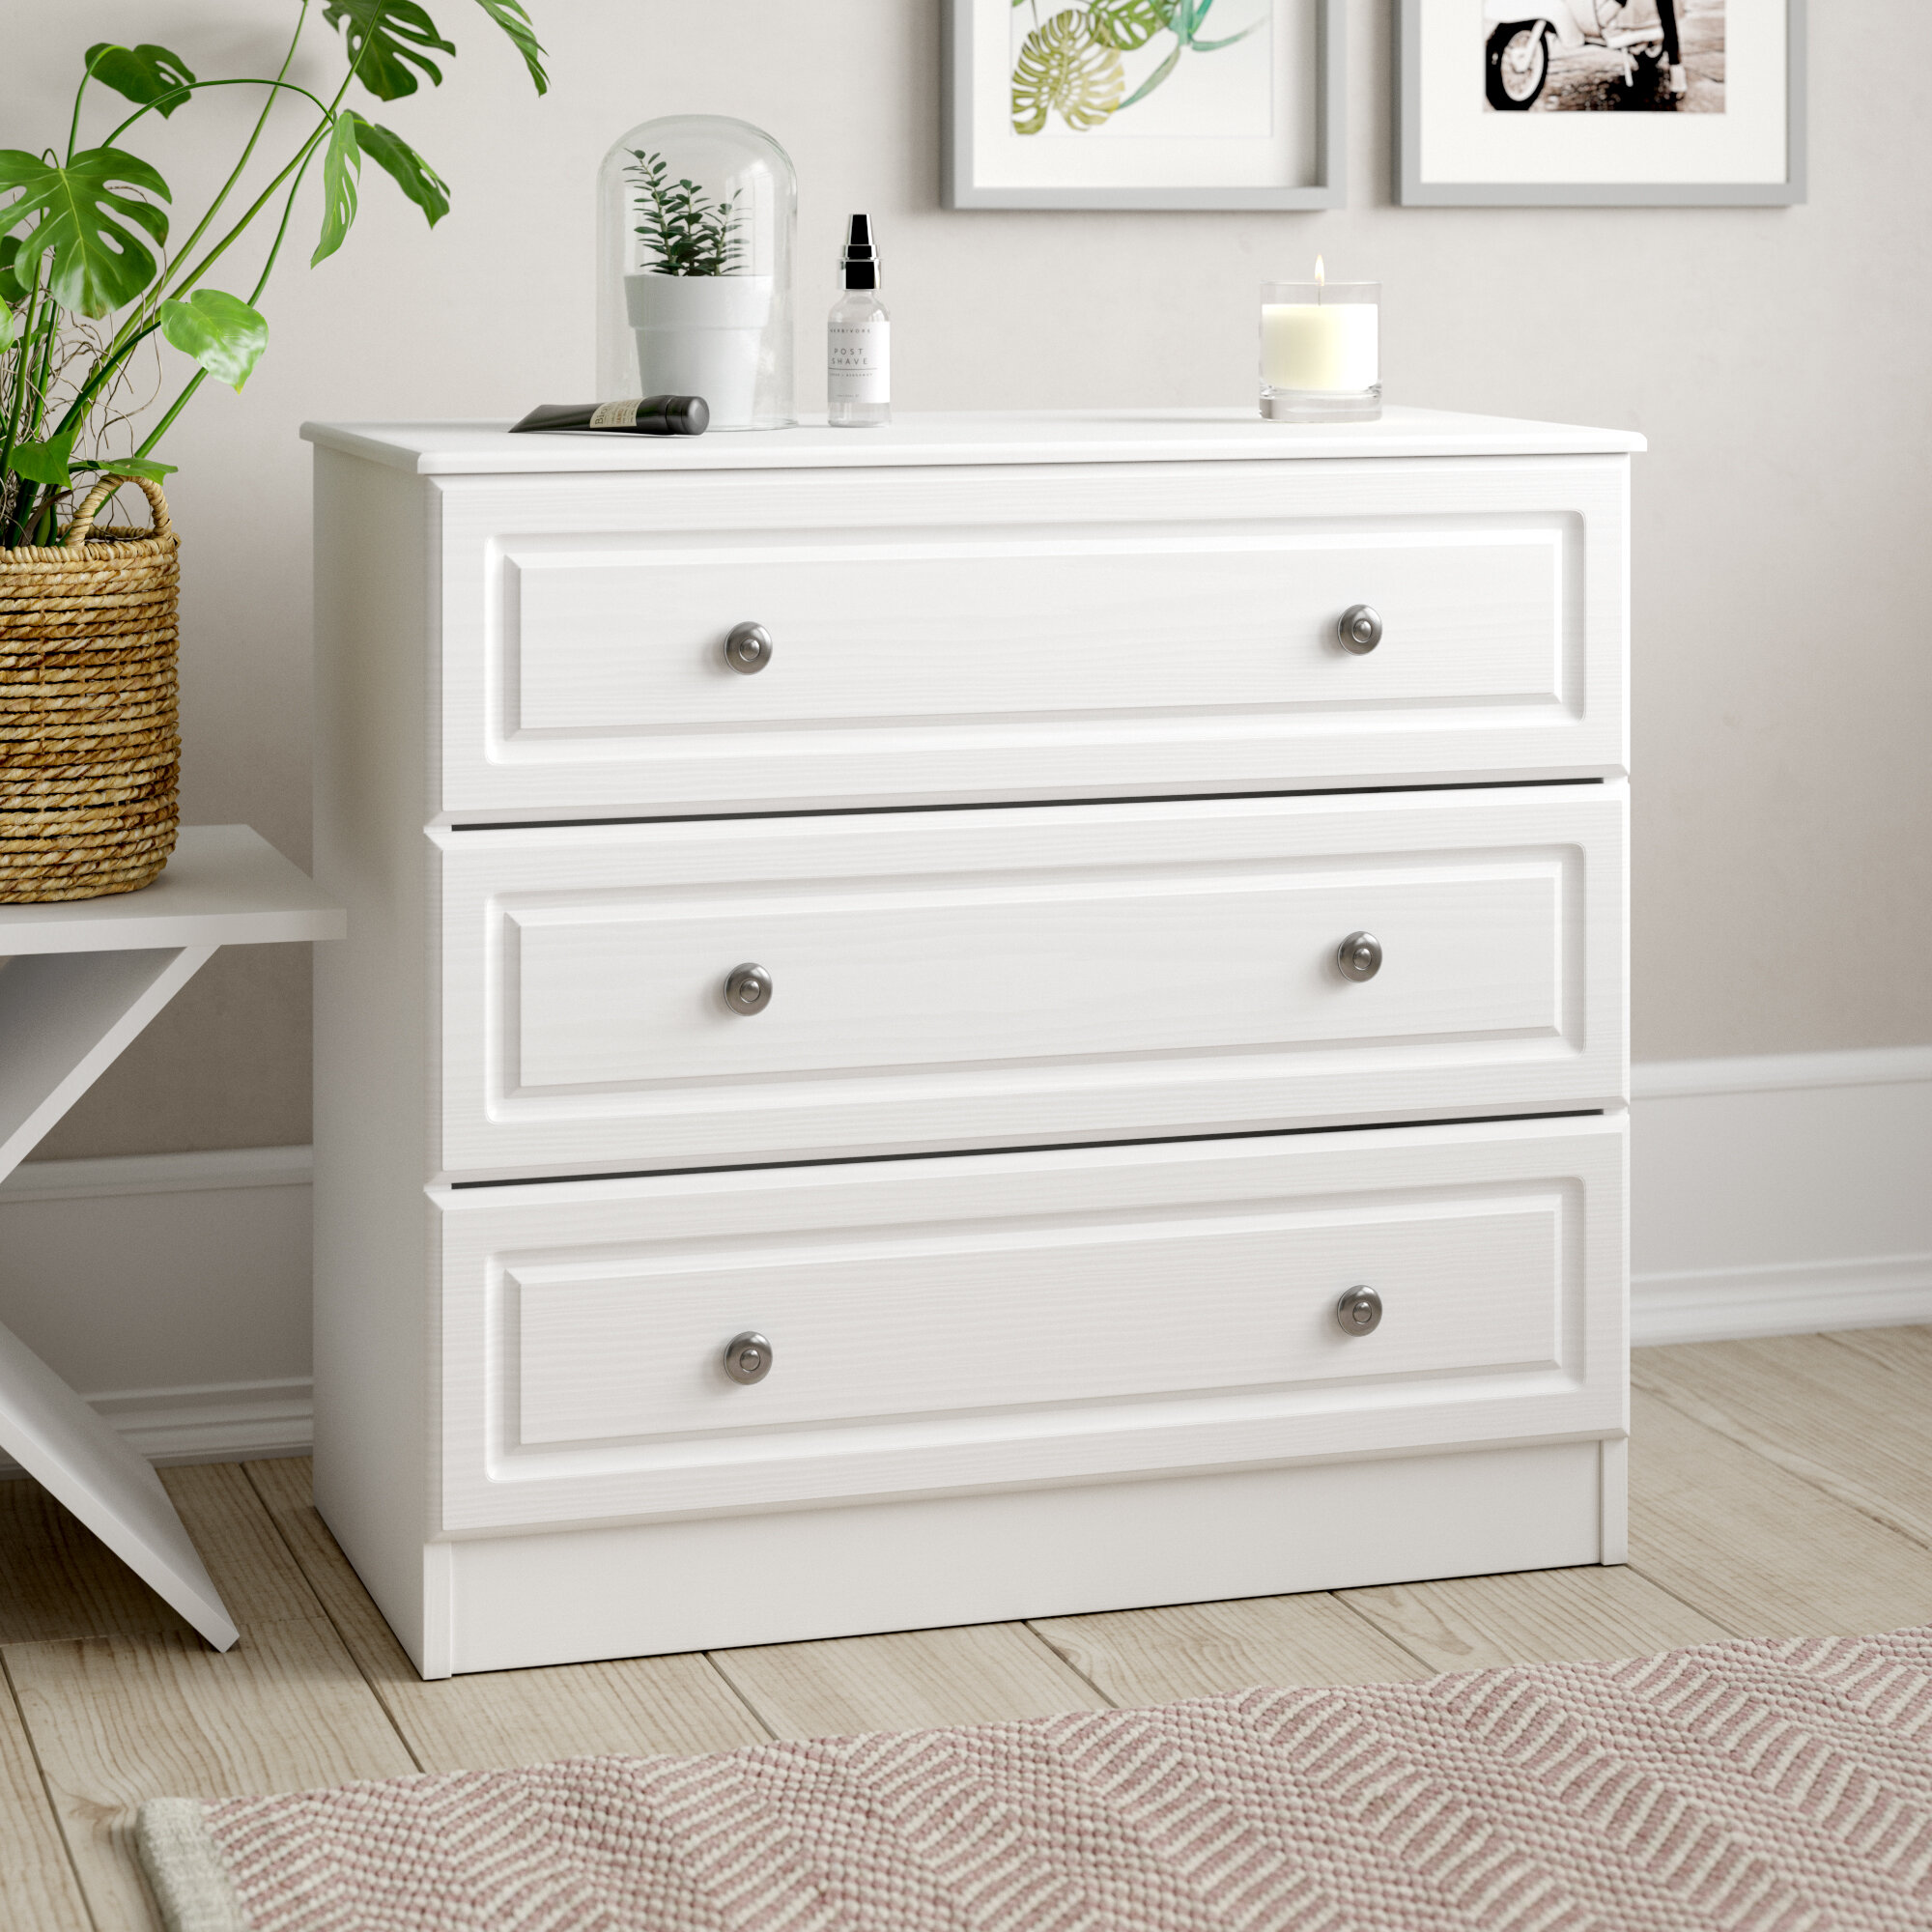 Hampshire White textured bedroom furniture